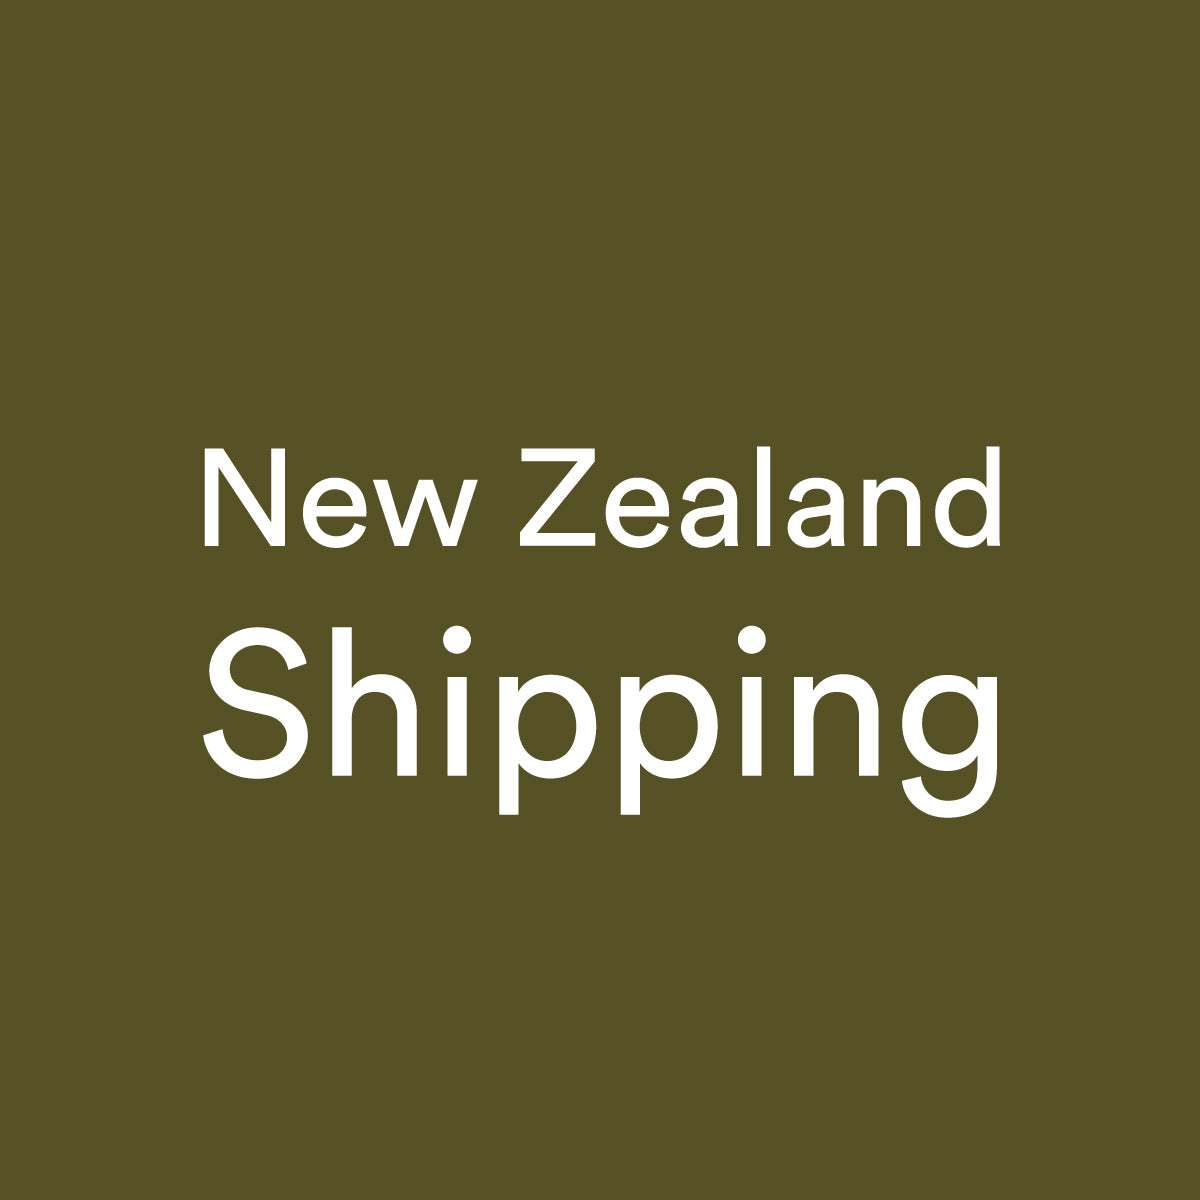 New Zealand Shipping